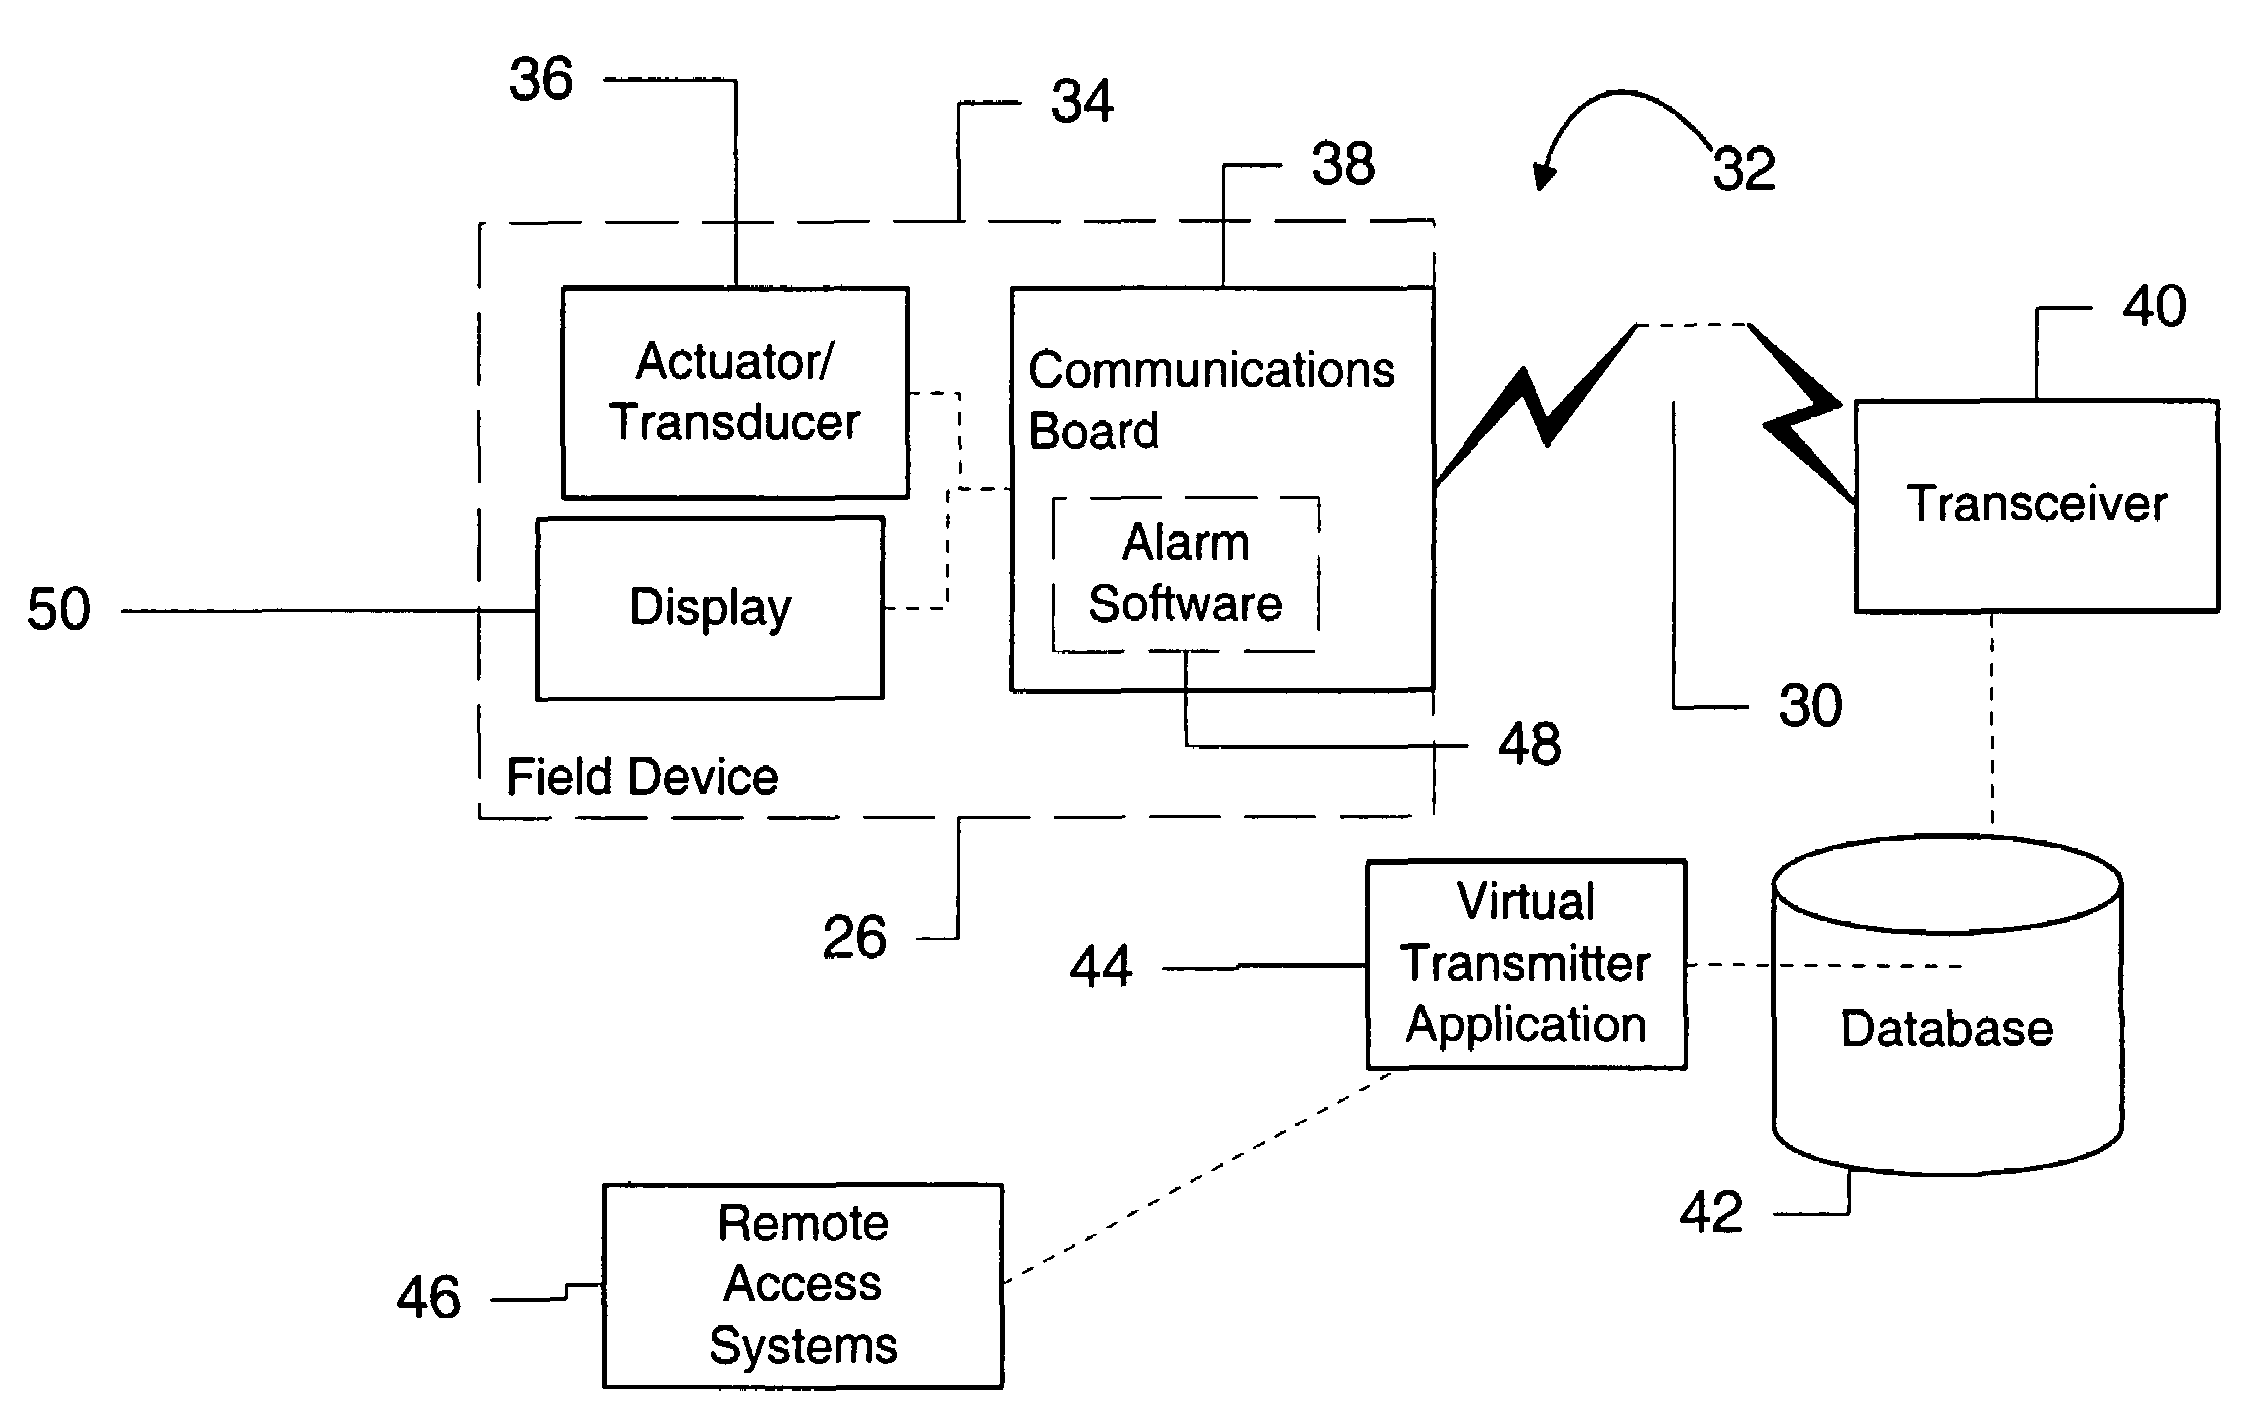 Virtual wireless transmitter